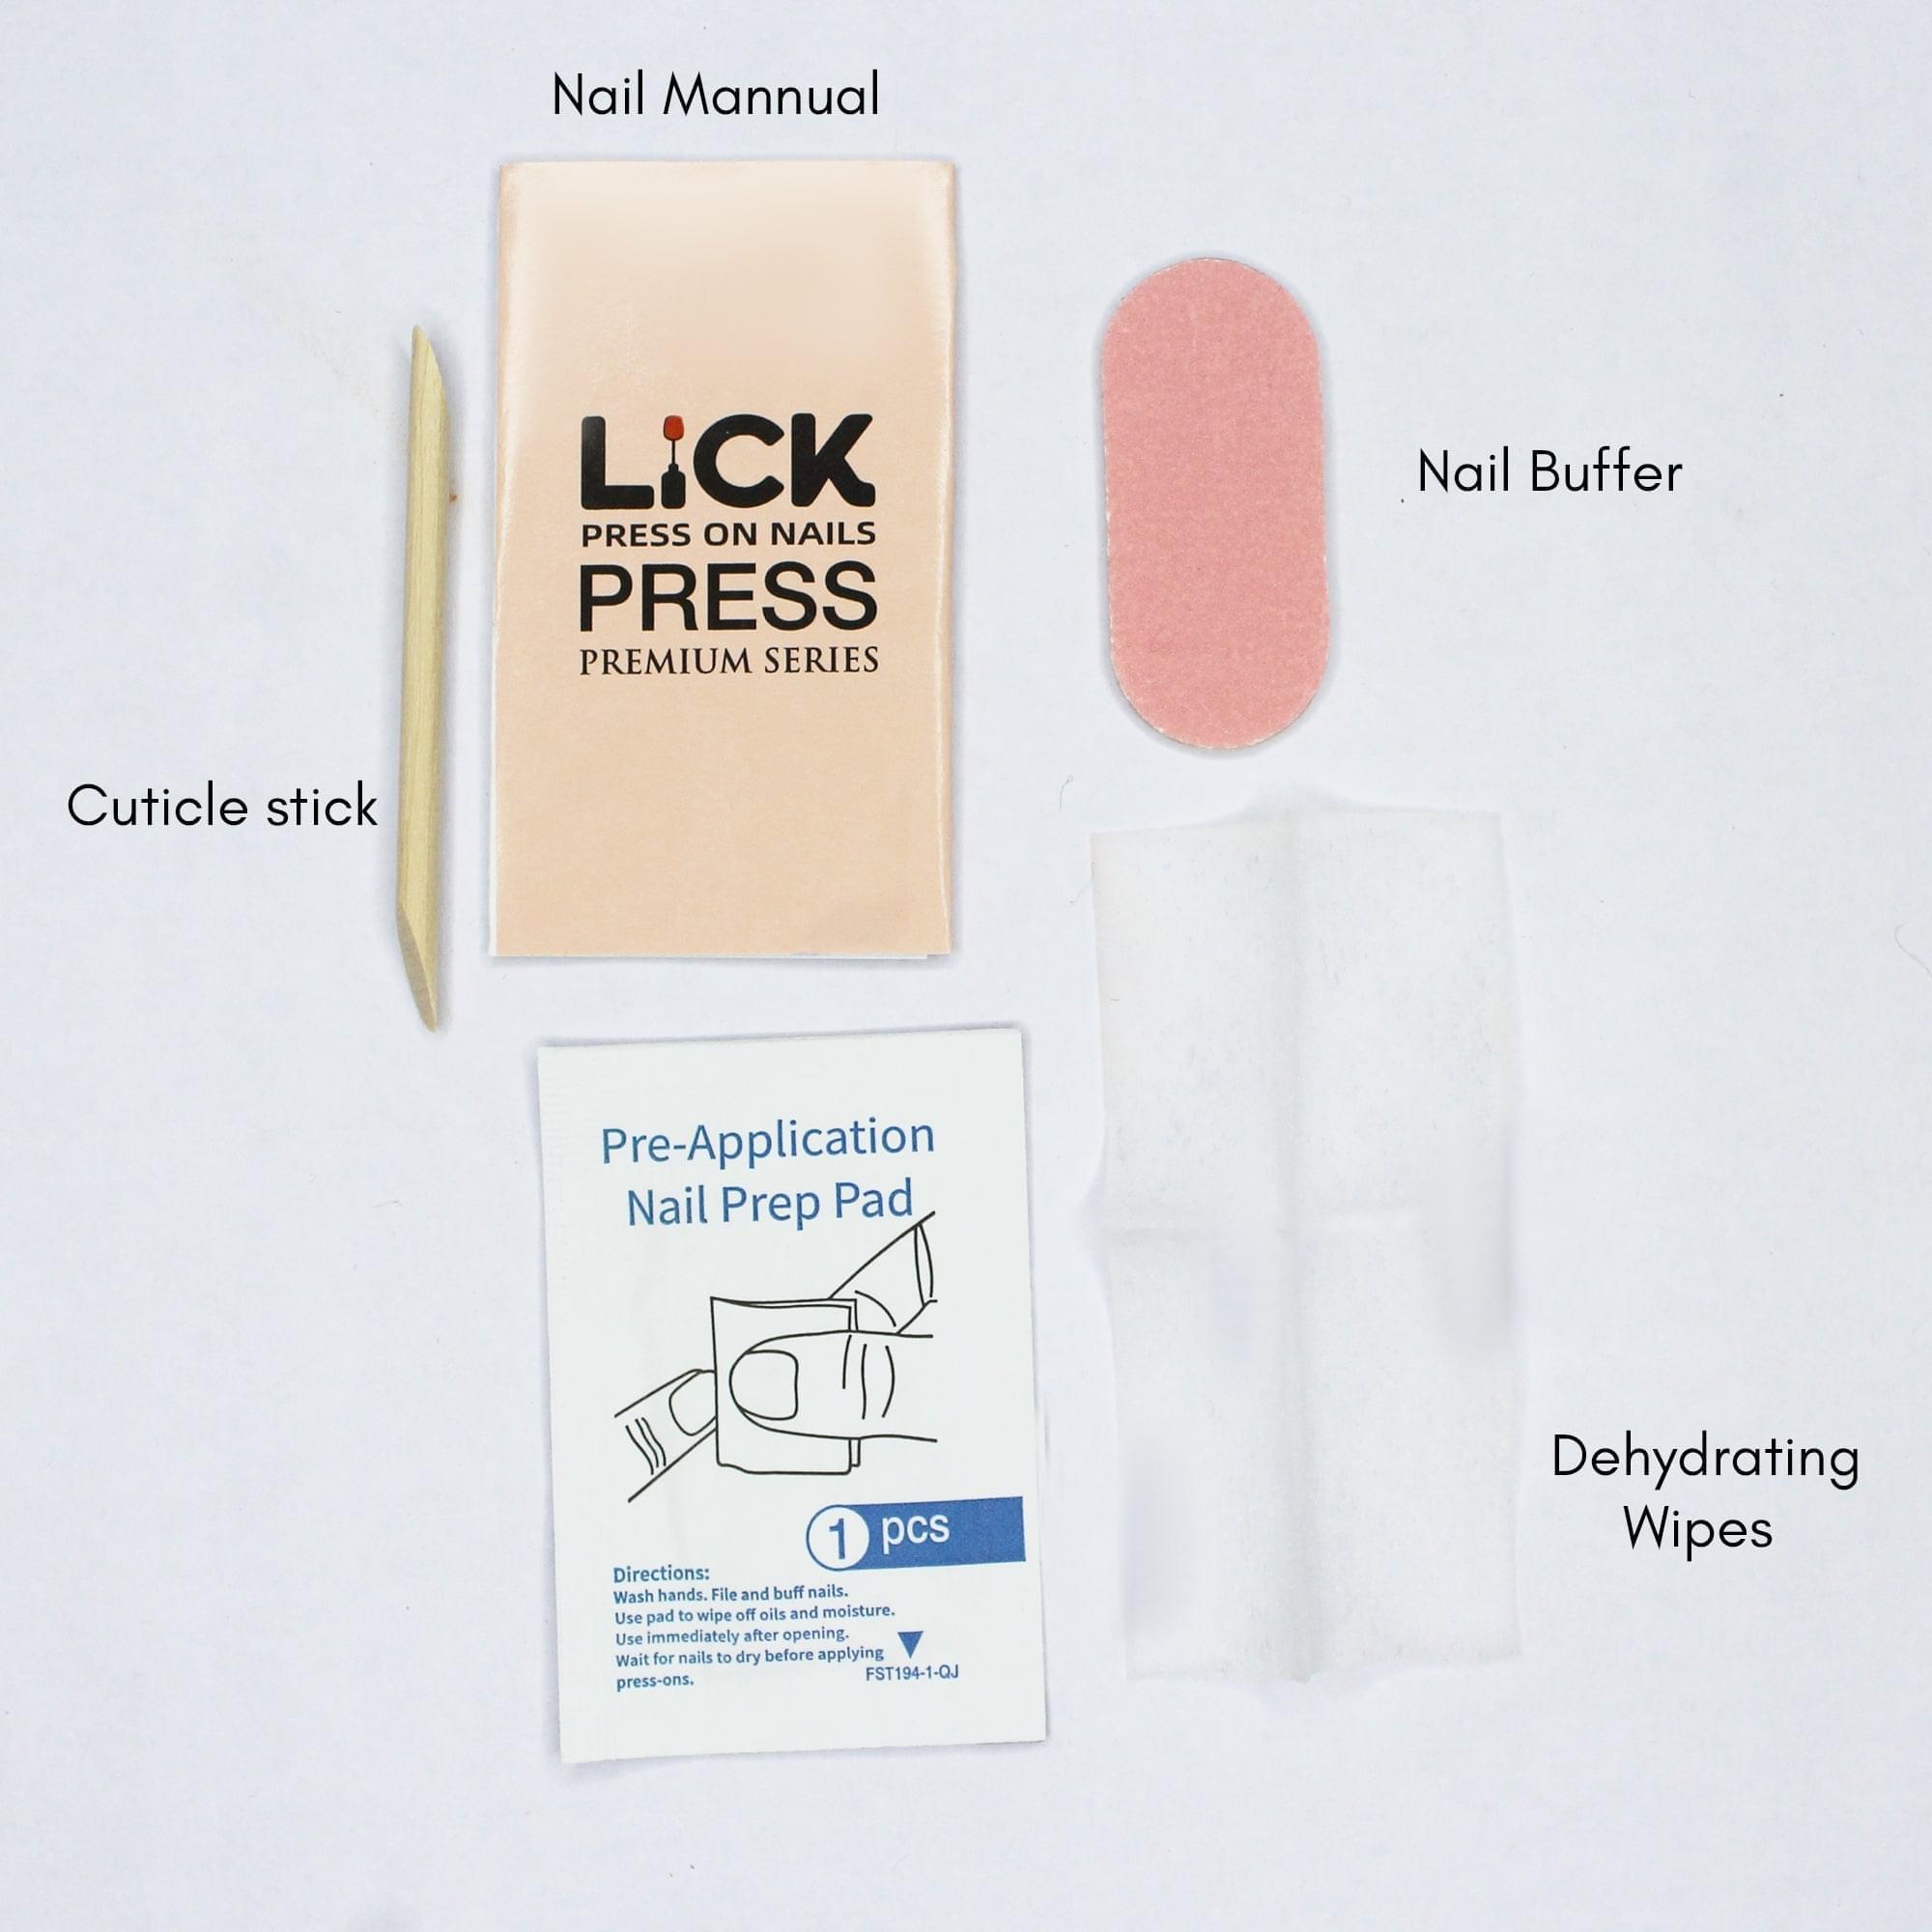 Lick Nail Glossy Finish Chromatic Oval Shape Press on Nails Pack of 24 Pcs